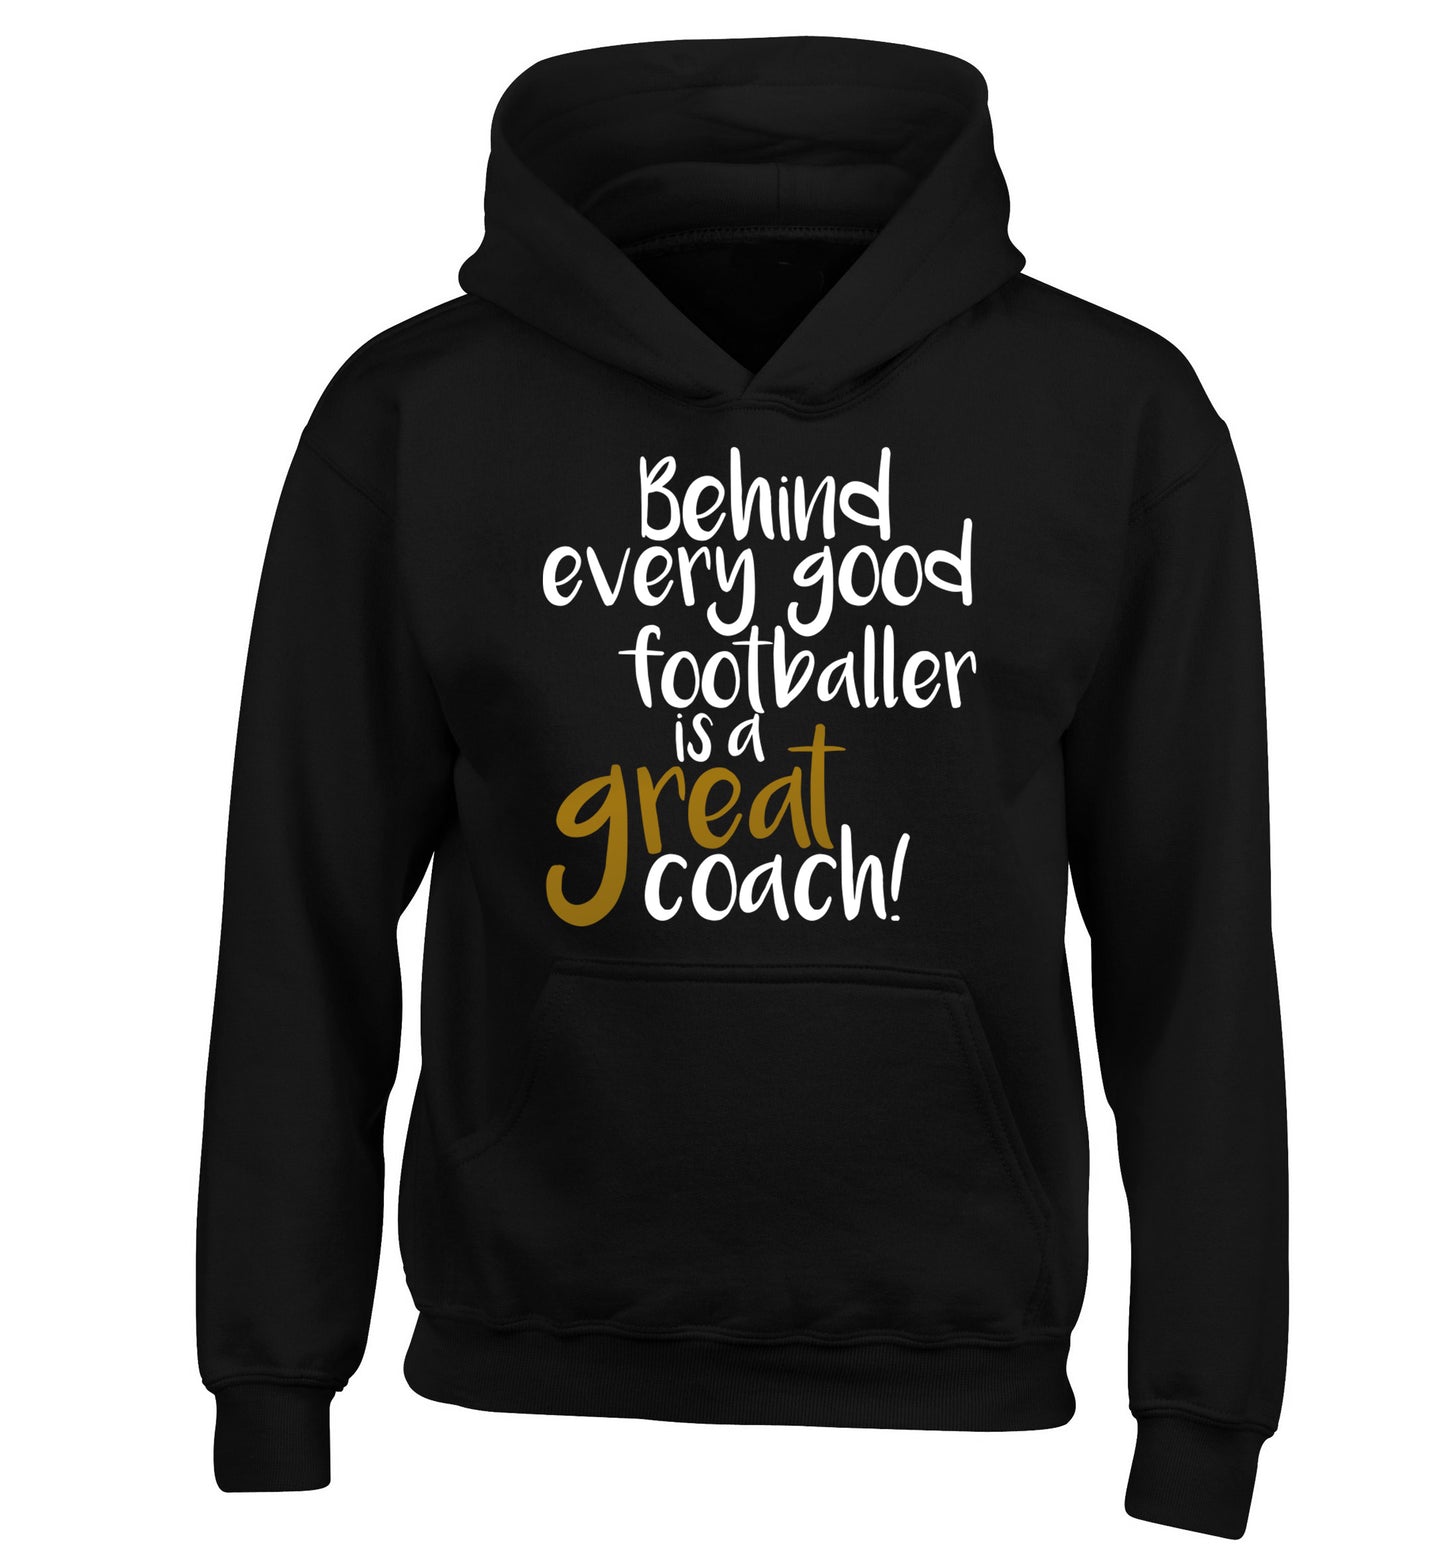 Behind every good footballer is a great coach! children's black hoodie 12-14 Years